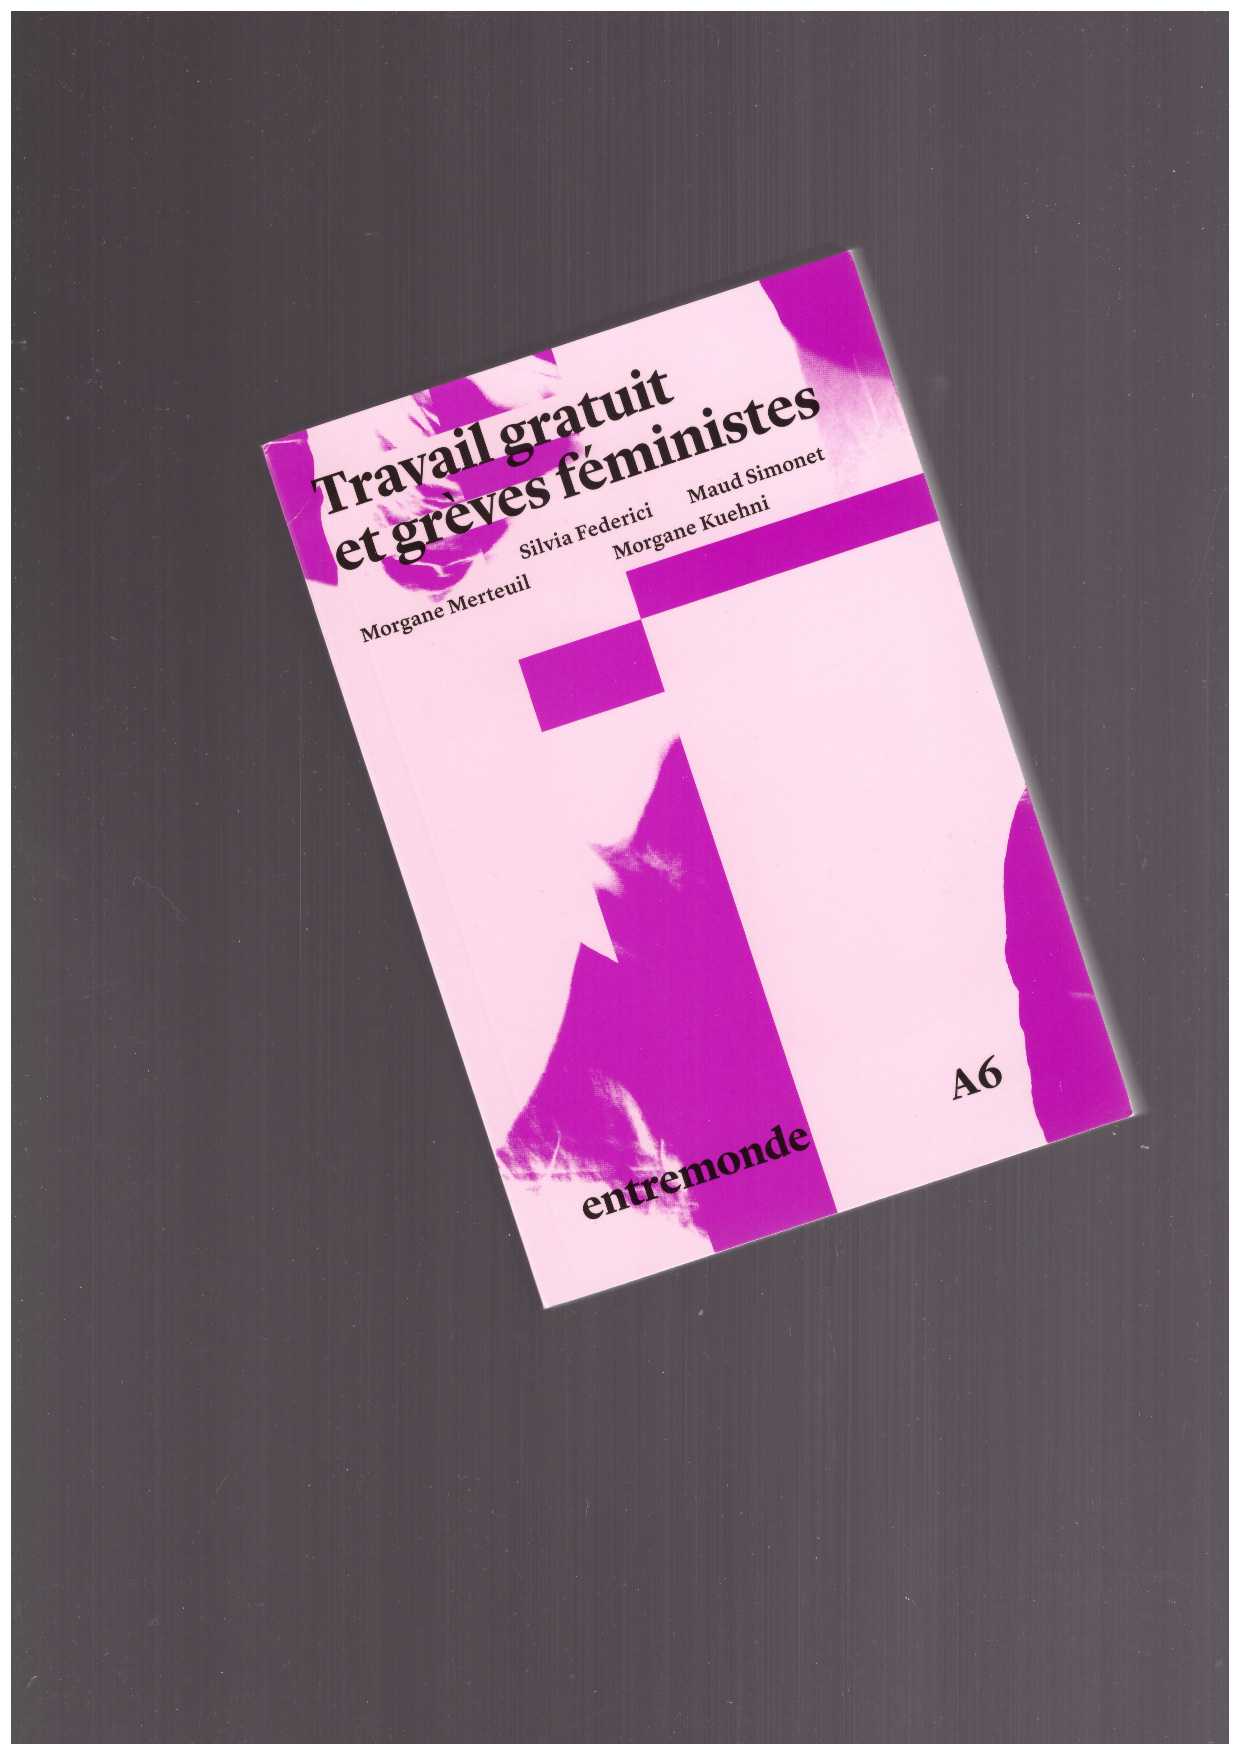 Silvia Federici, Morgane Merteuil, Maud Simonet, Morgane Kuehni (eds.) - Travail gratuit et grèves féministes